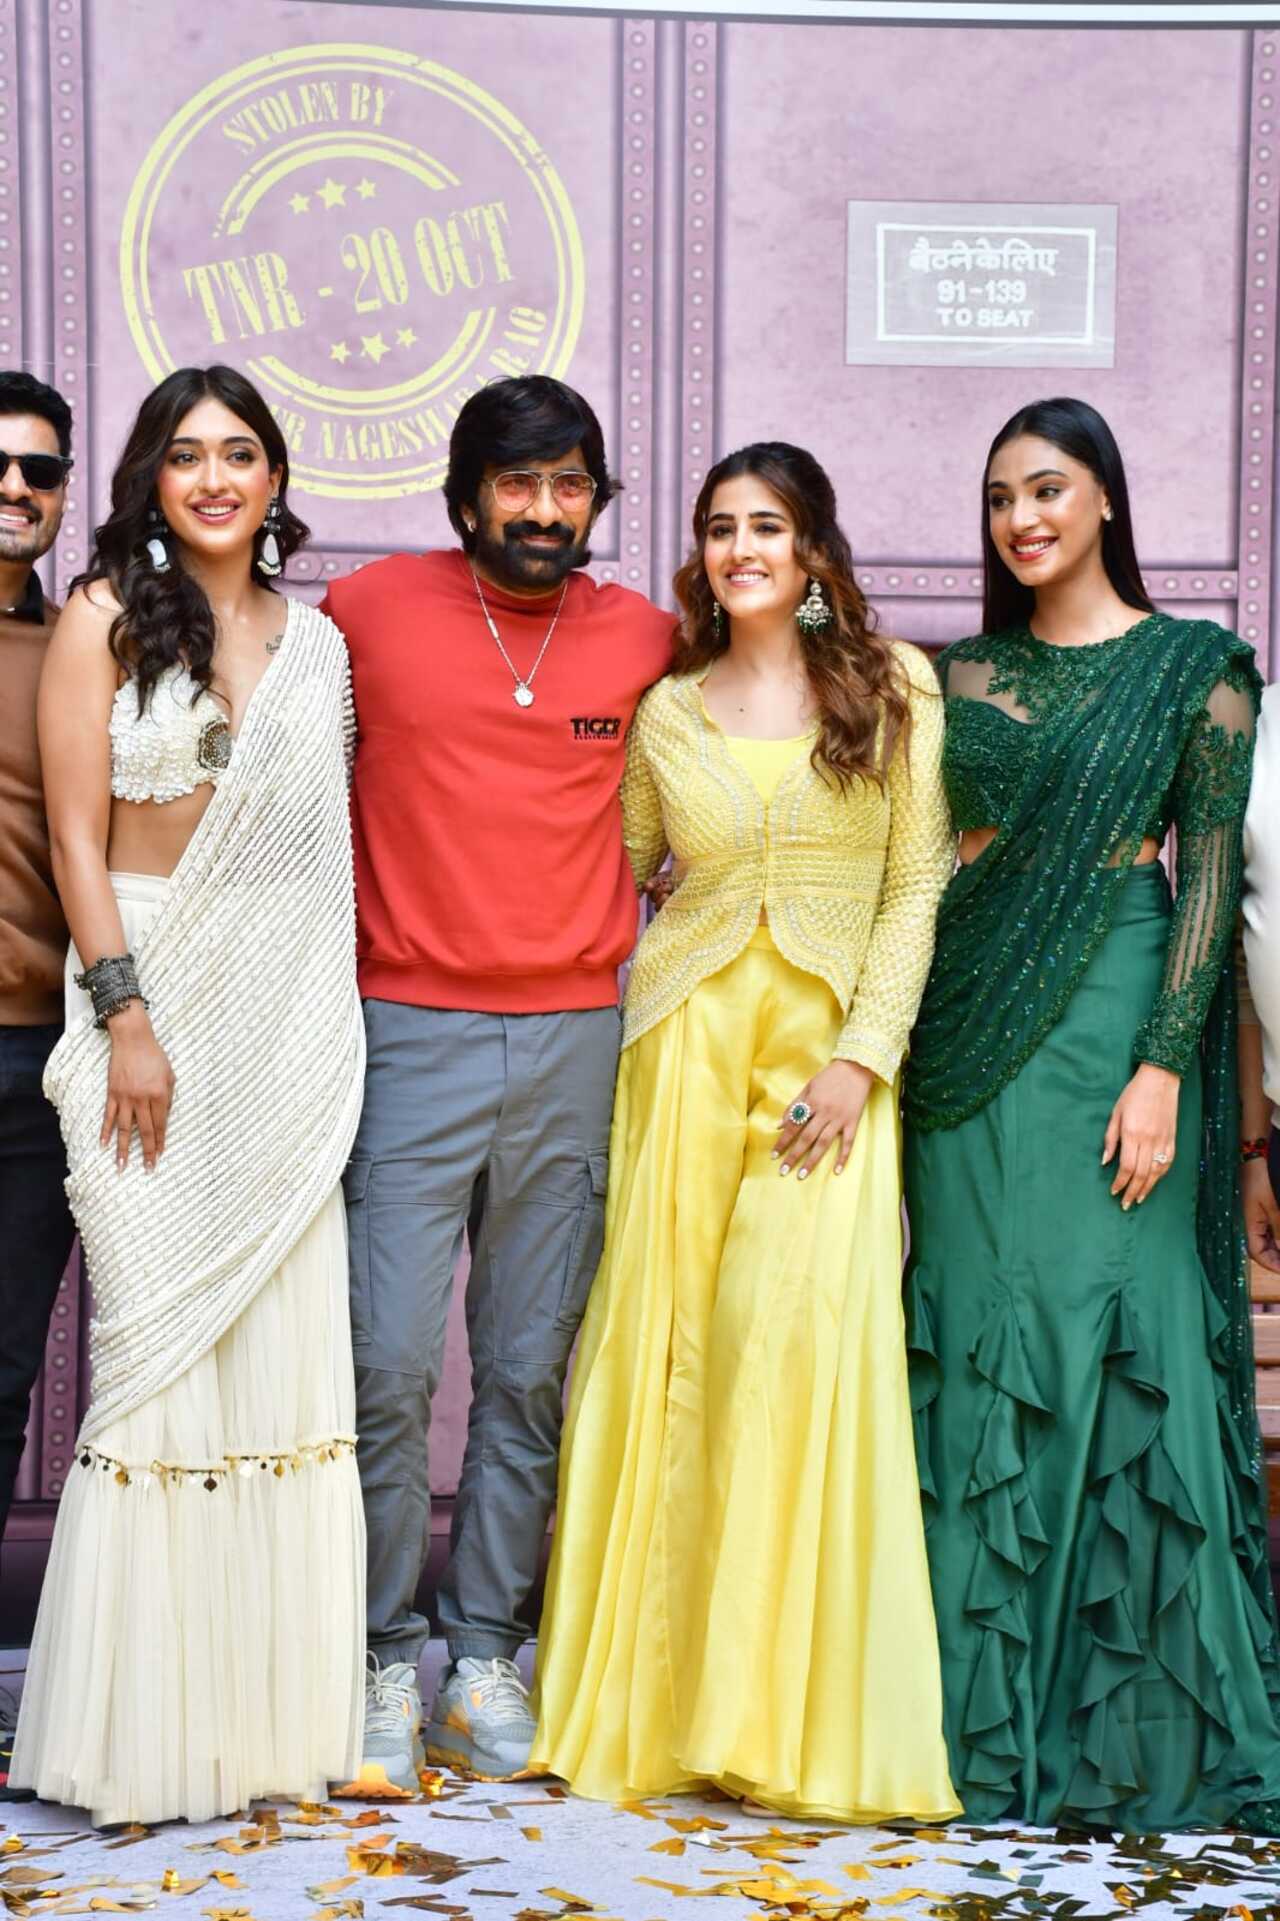 Ravi Teja poses with the ladies